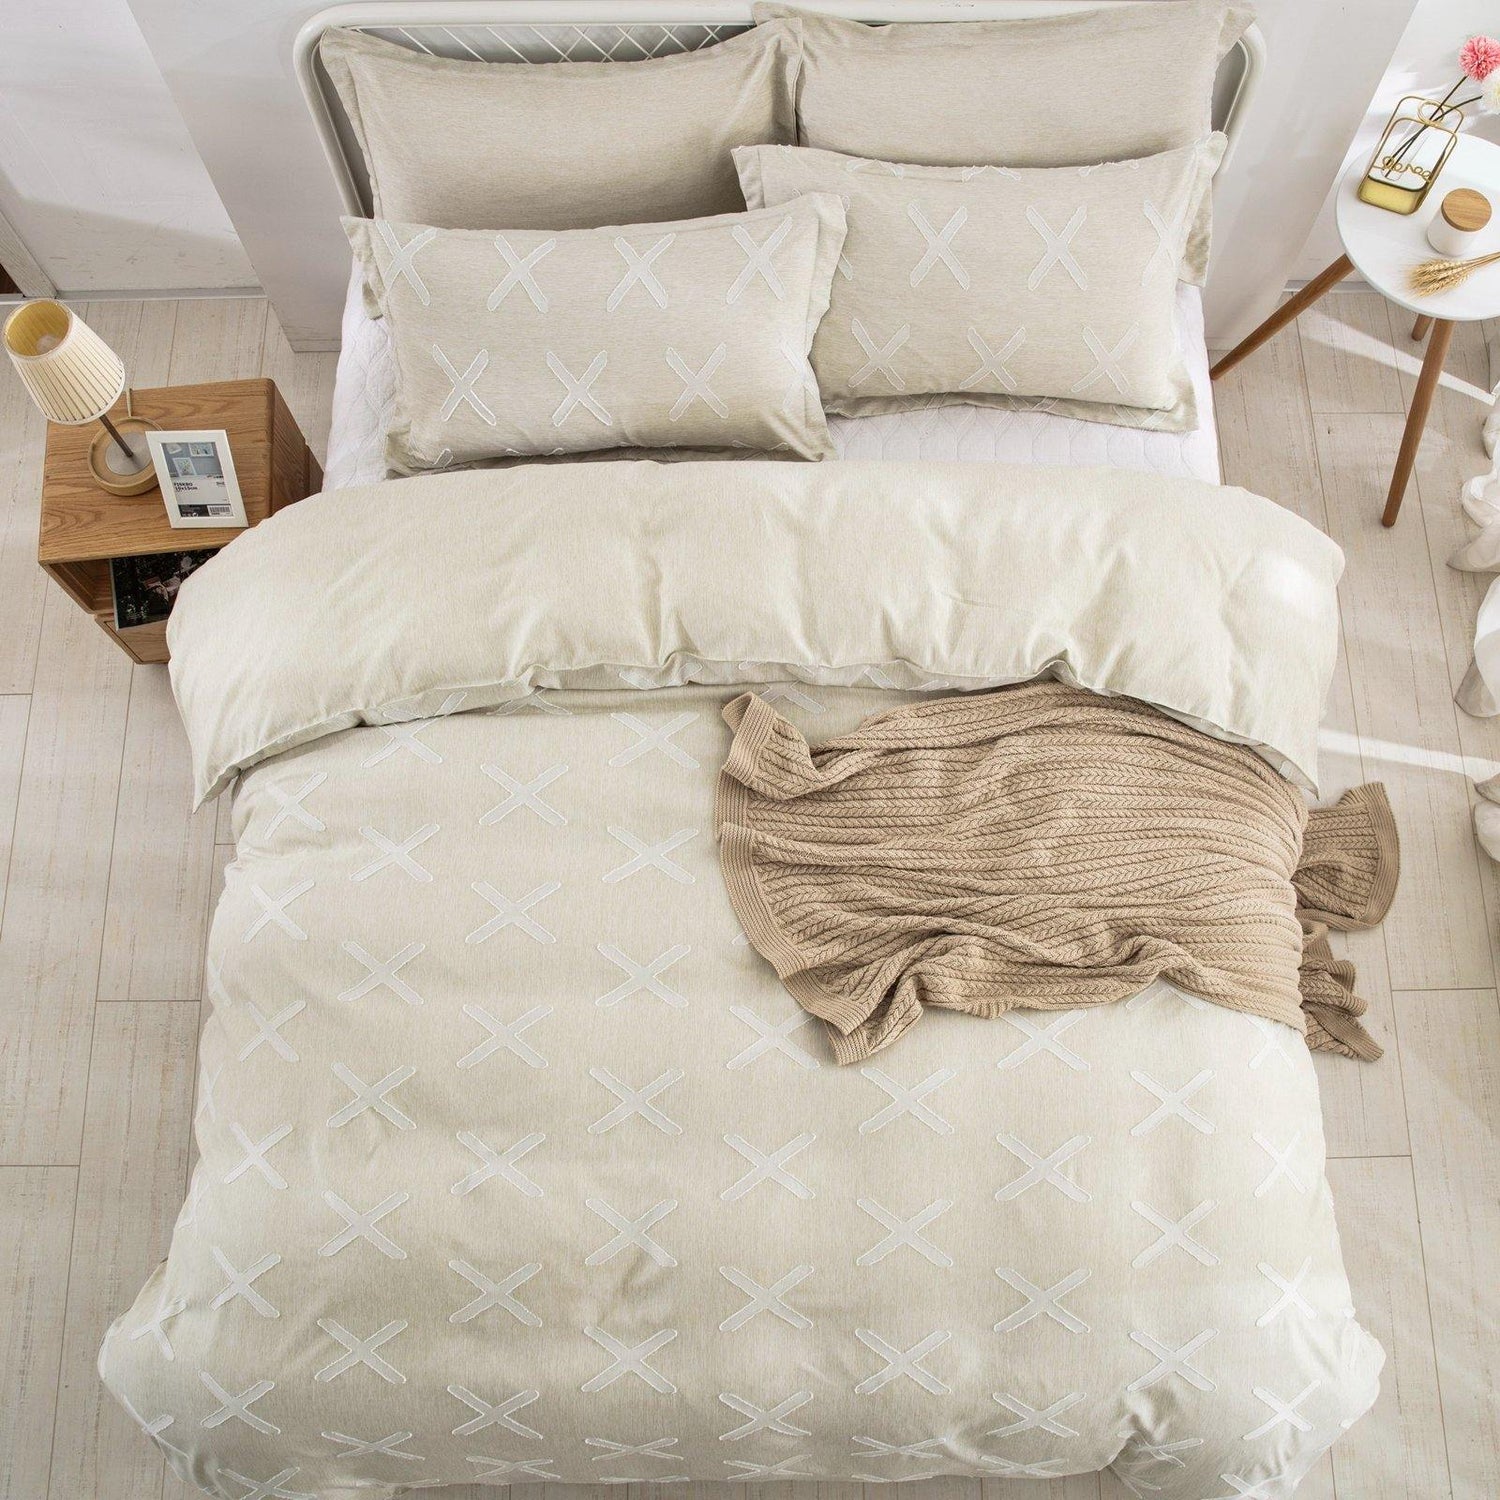 WONGS BEDDING Cream Color Duvet Cover Set - Wongs bedding